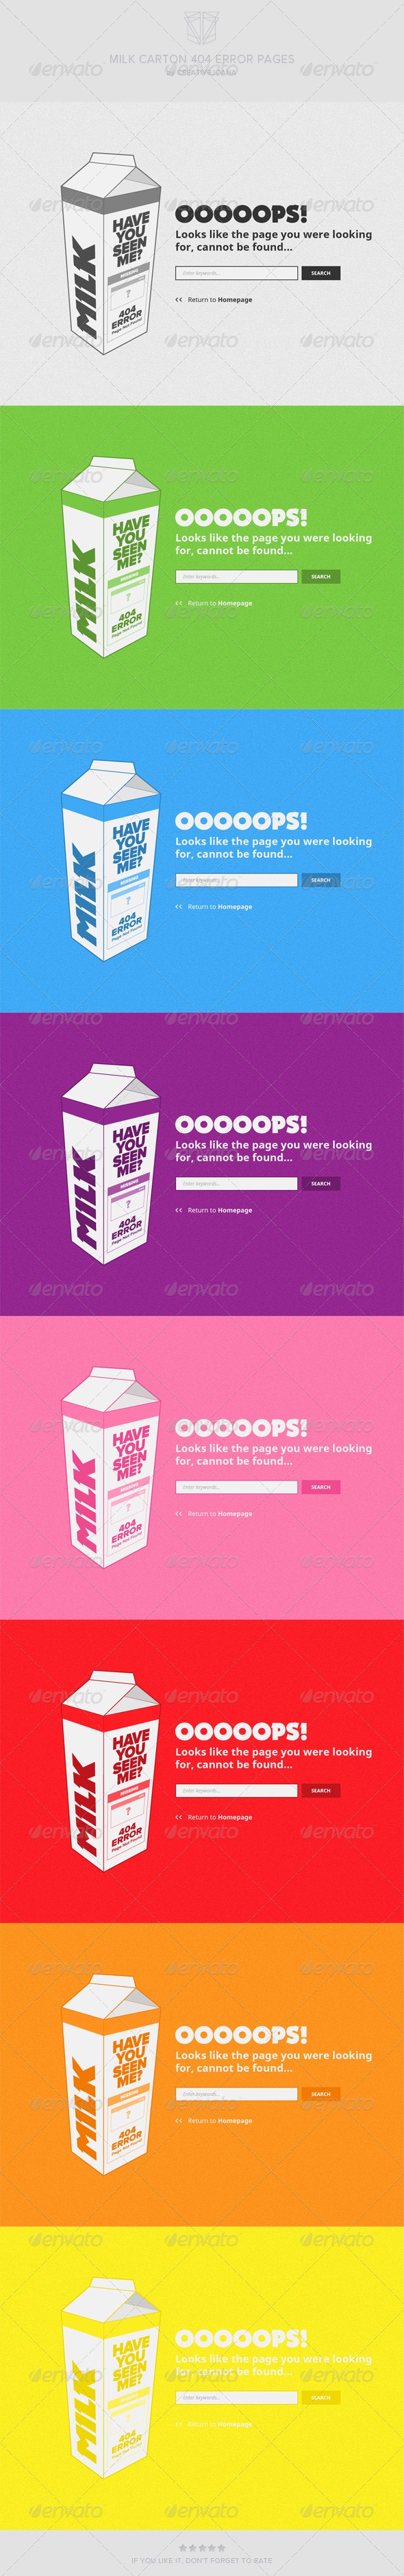 صفحات خطای 404 پاسخگوی کارتن شیر